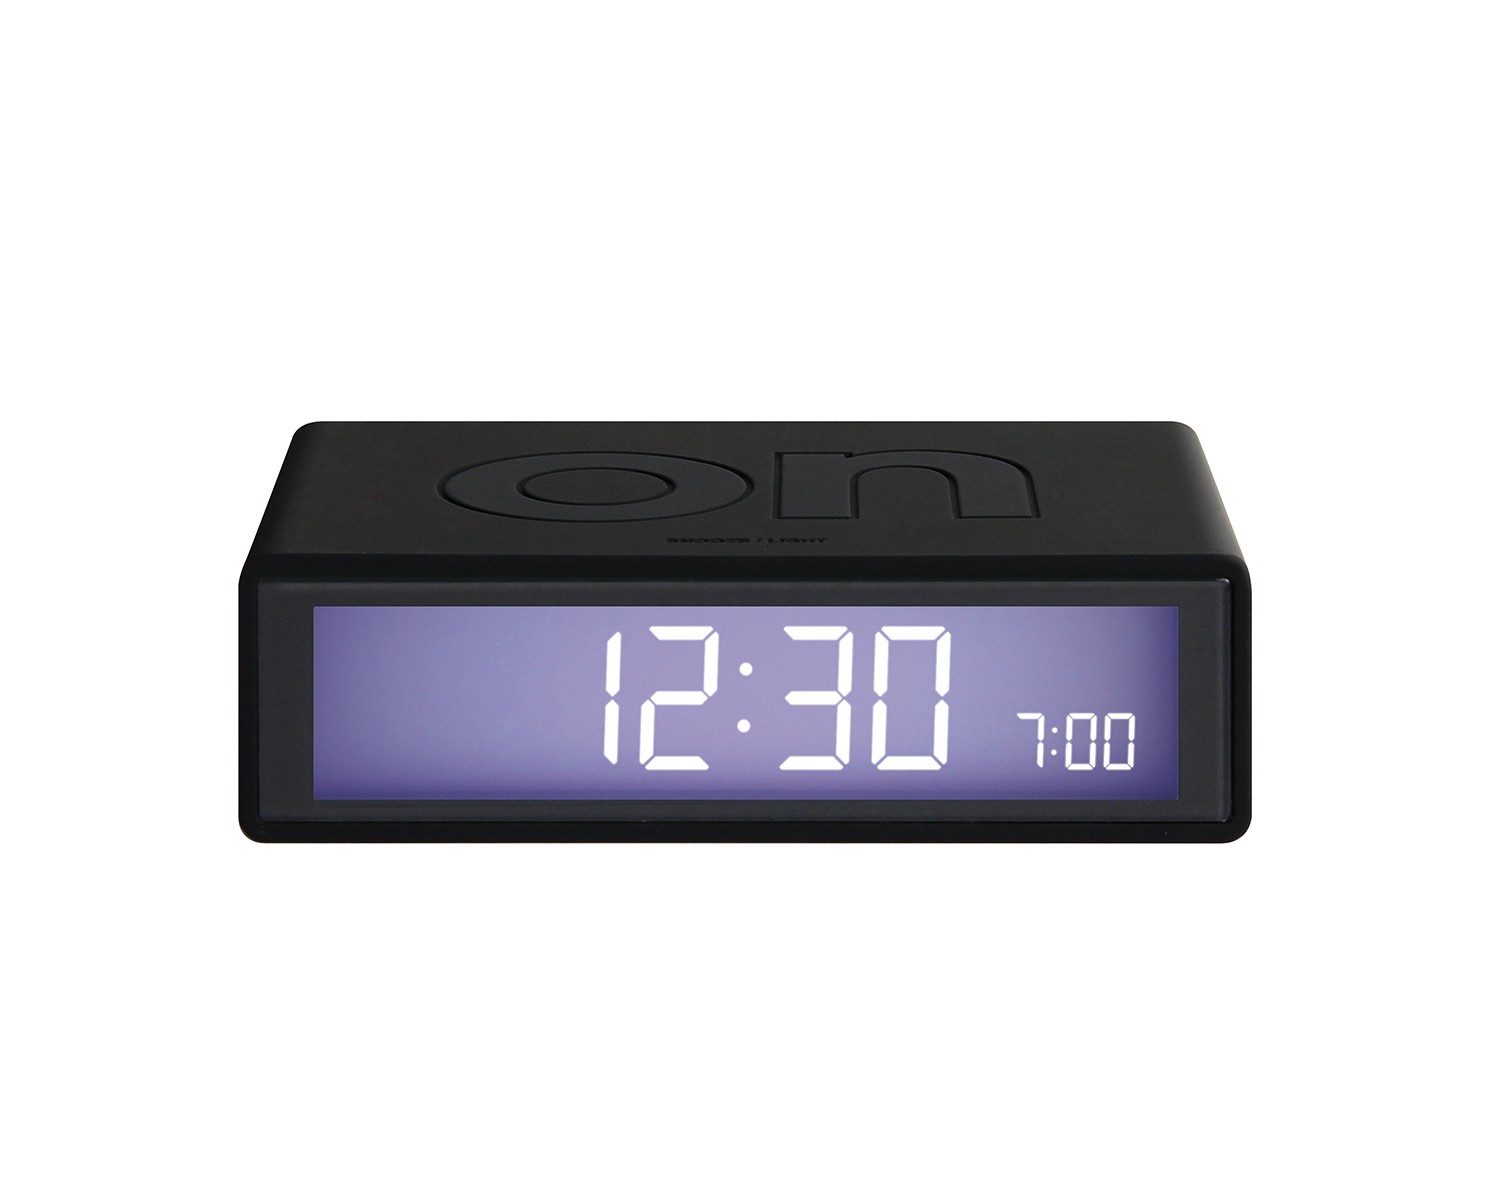 Flip alarm clock black